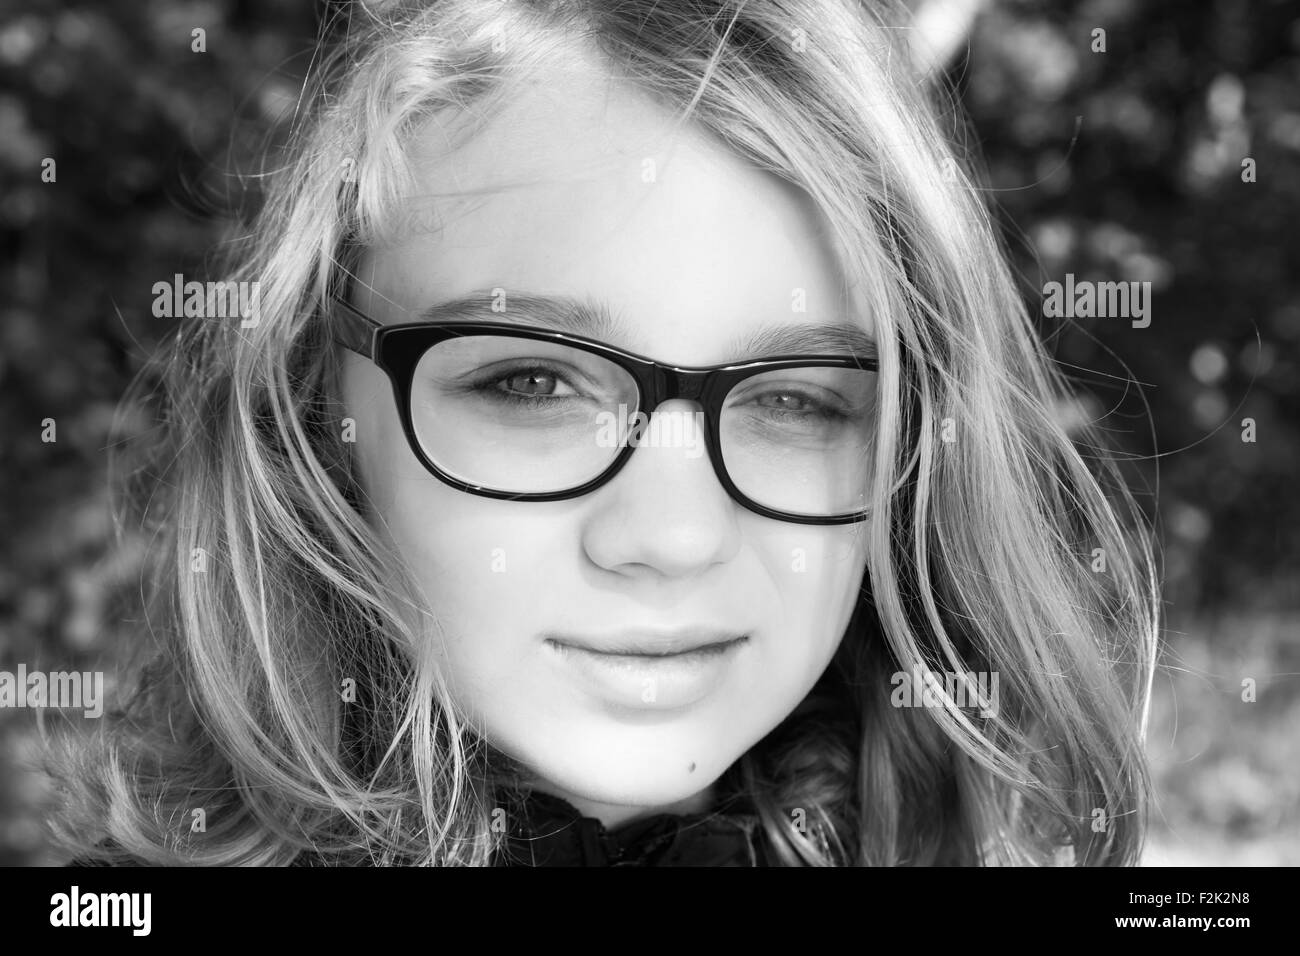 Beautiful blond Caucasian teenage girl in glasses, outdoor monochrome portrait Stock Photo